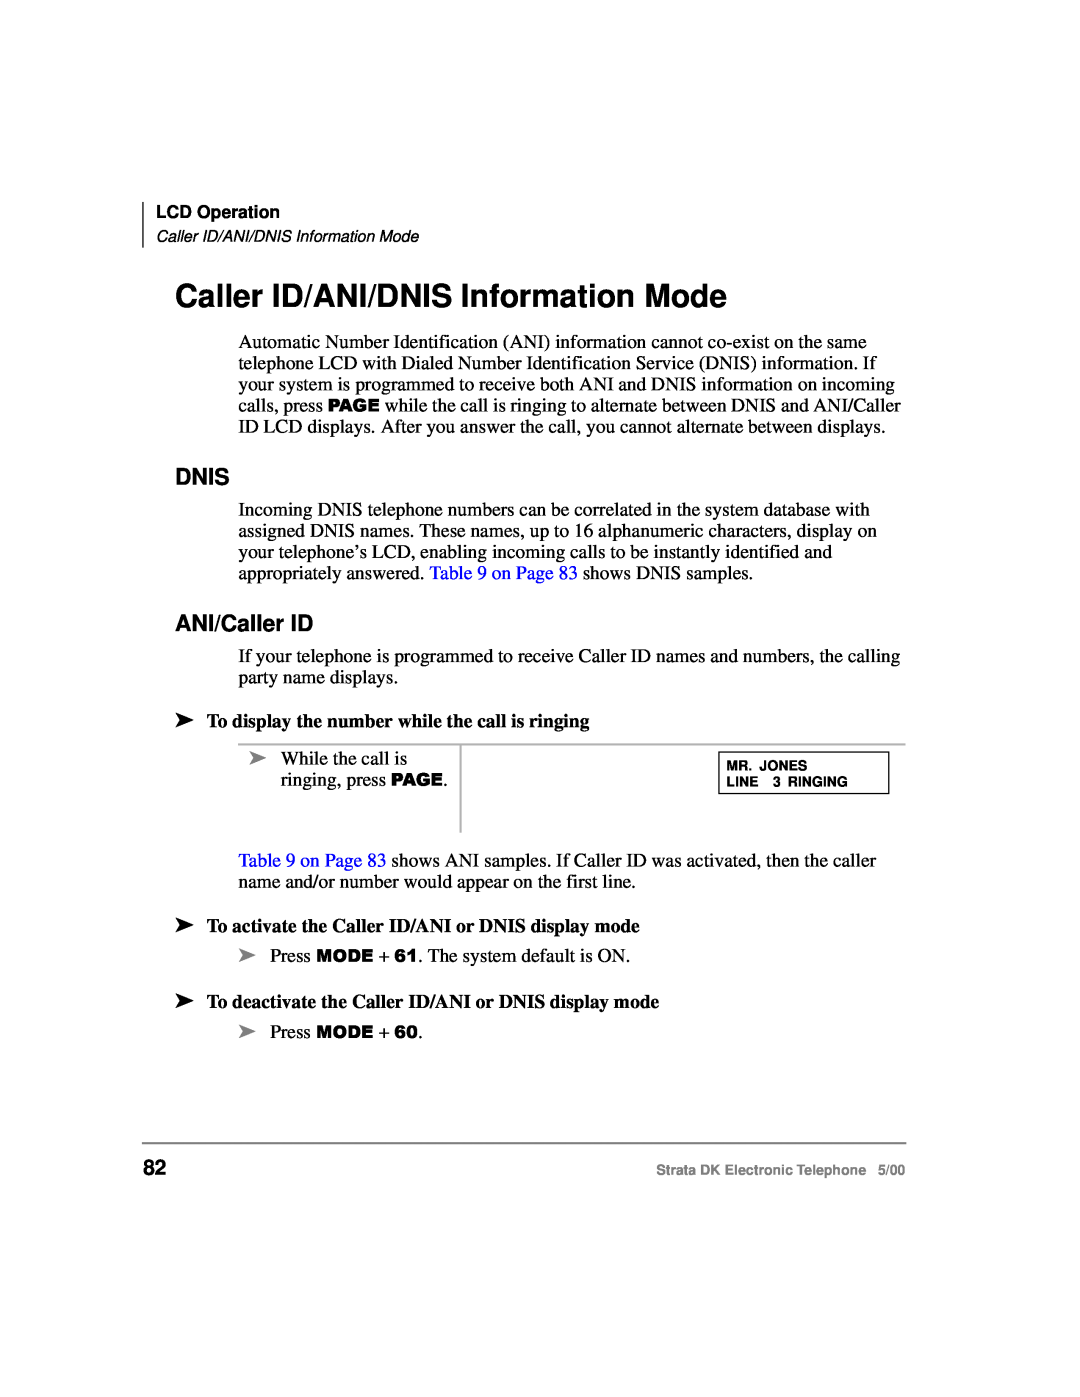 Toshiba Strata DK manual Caller ID/ANI/DNIS Information Mode, Dnis, ANI/Caller ID 